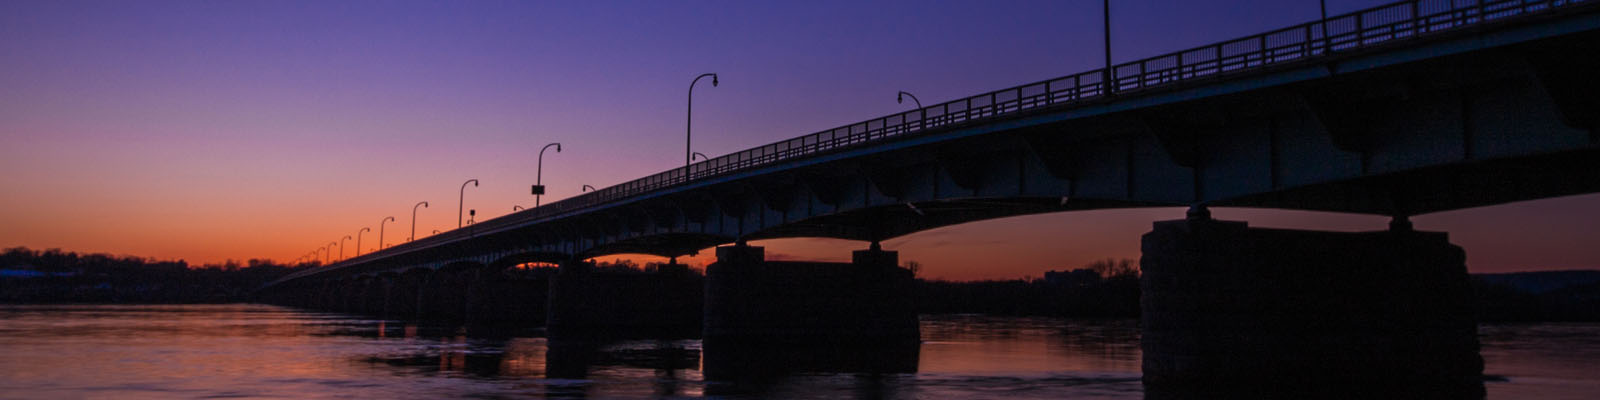 Pictured: A bridge in Pennsylvania.